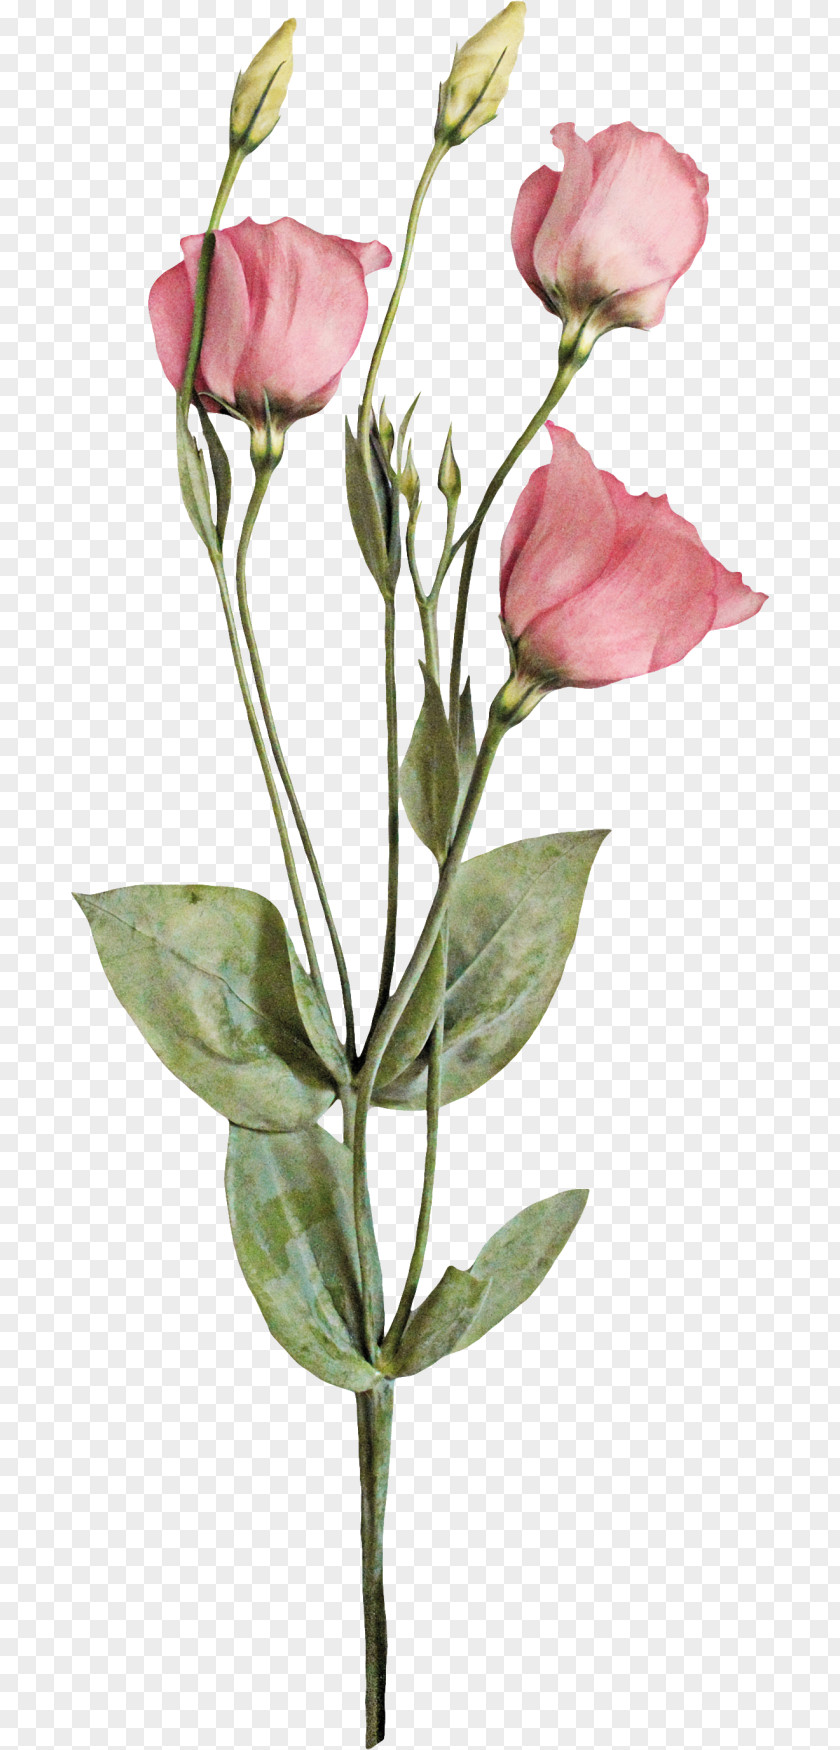 Romantic Pink Flowers Garden Roses Centifolia Cut Bud Plant Stem PNG